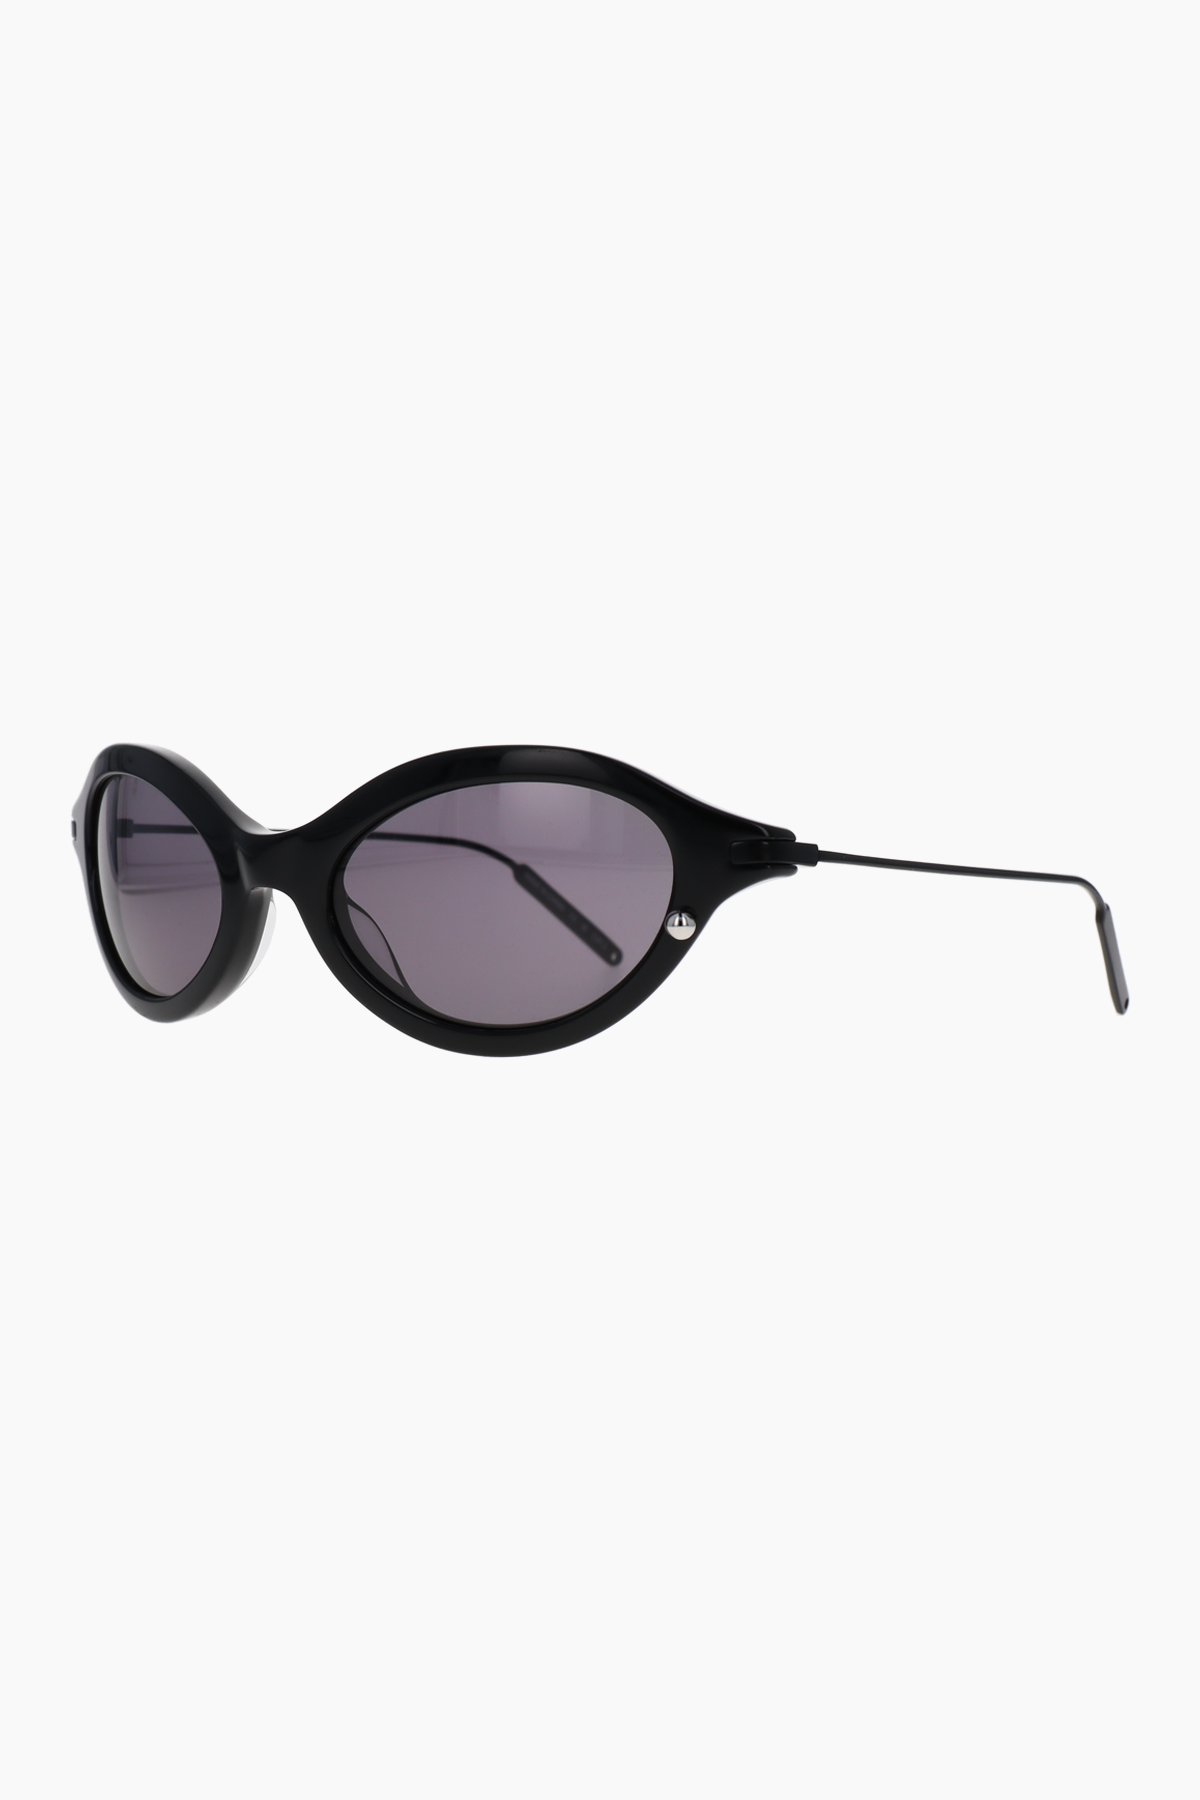 Neve black sunglasses